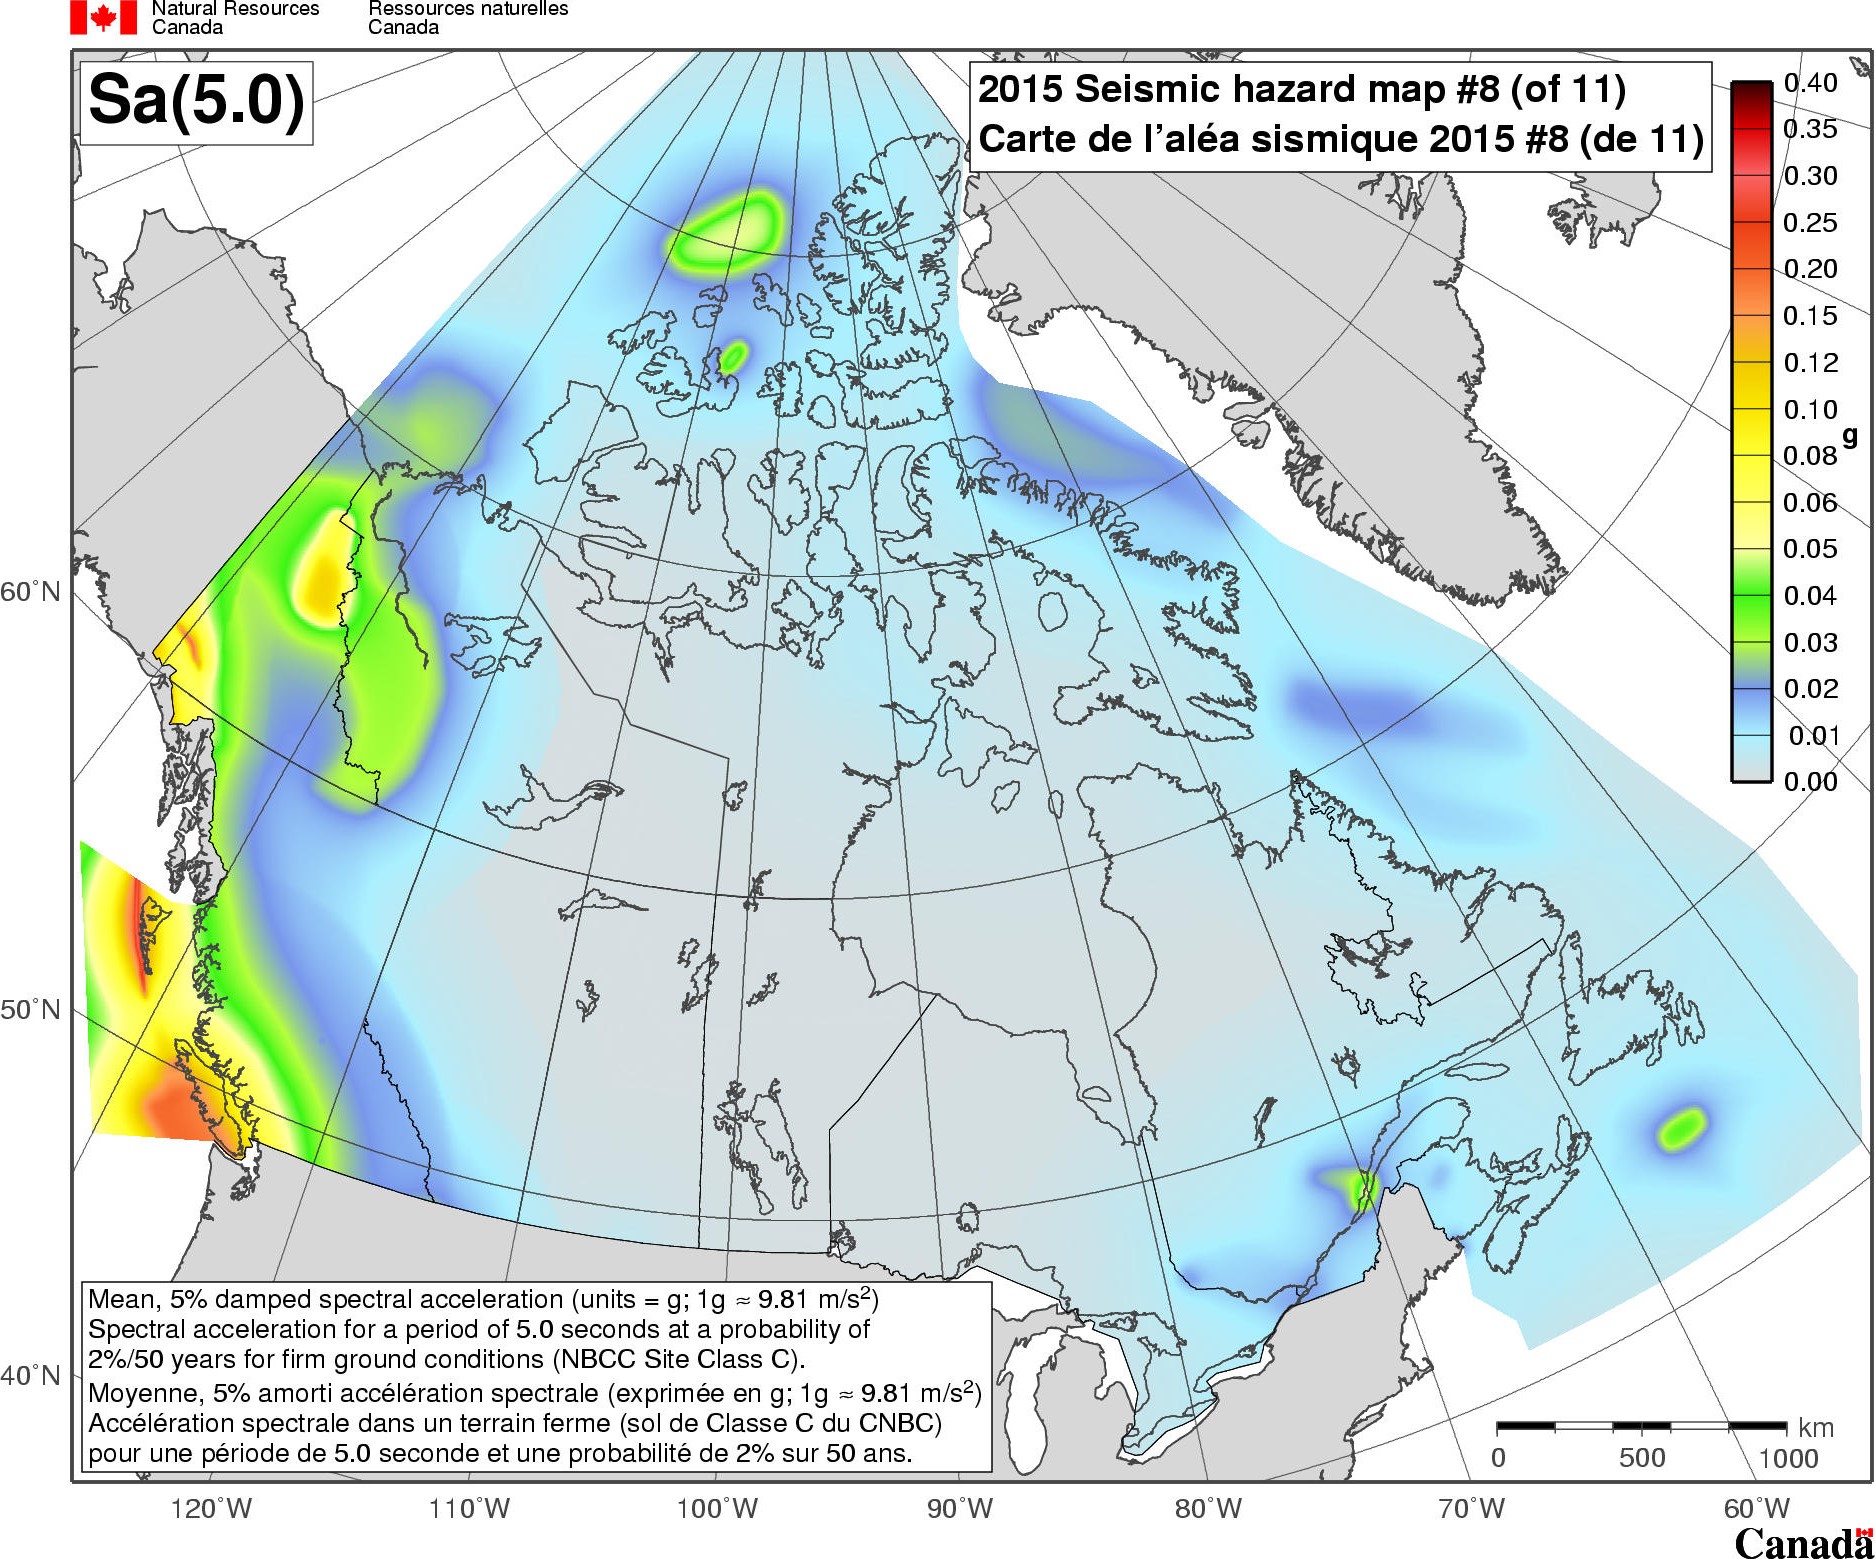 2015 NBCC seismic hazard map - Sa(5.0)